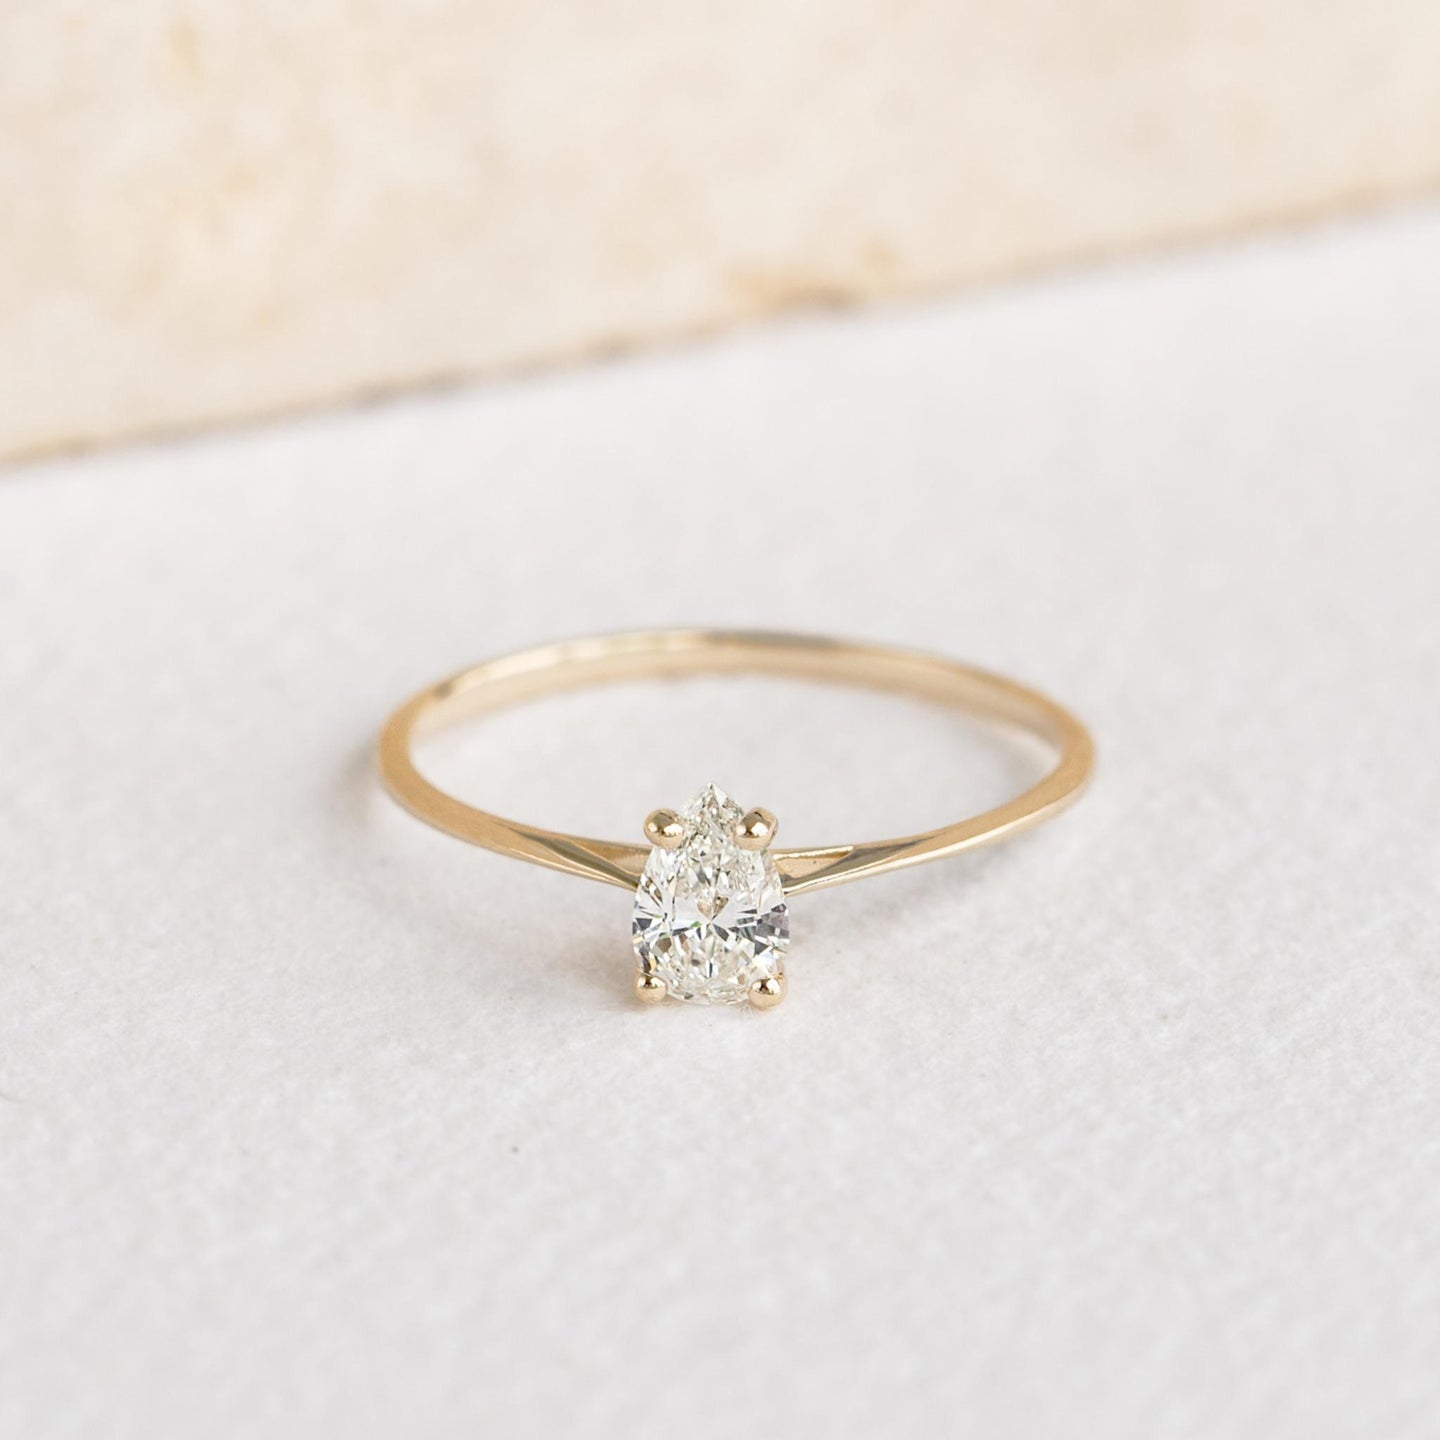 Pear Shaped Diamond Ring 14k Gold - Martine